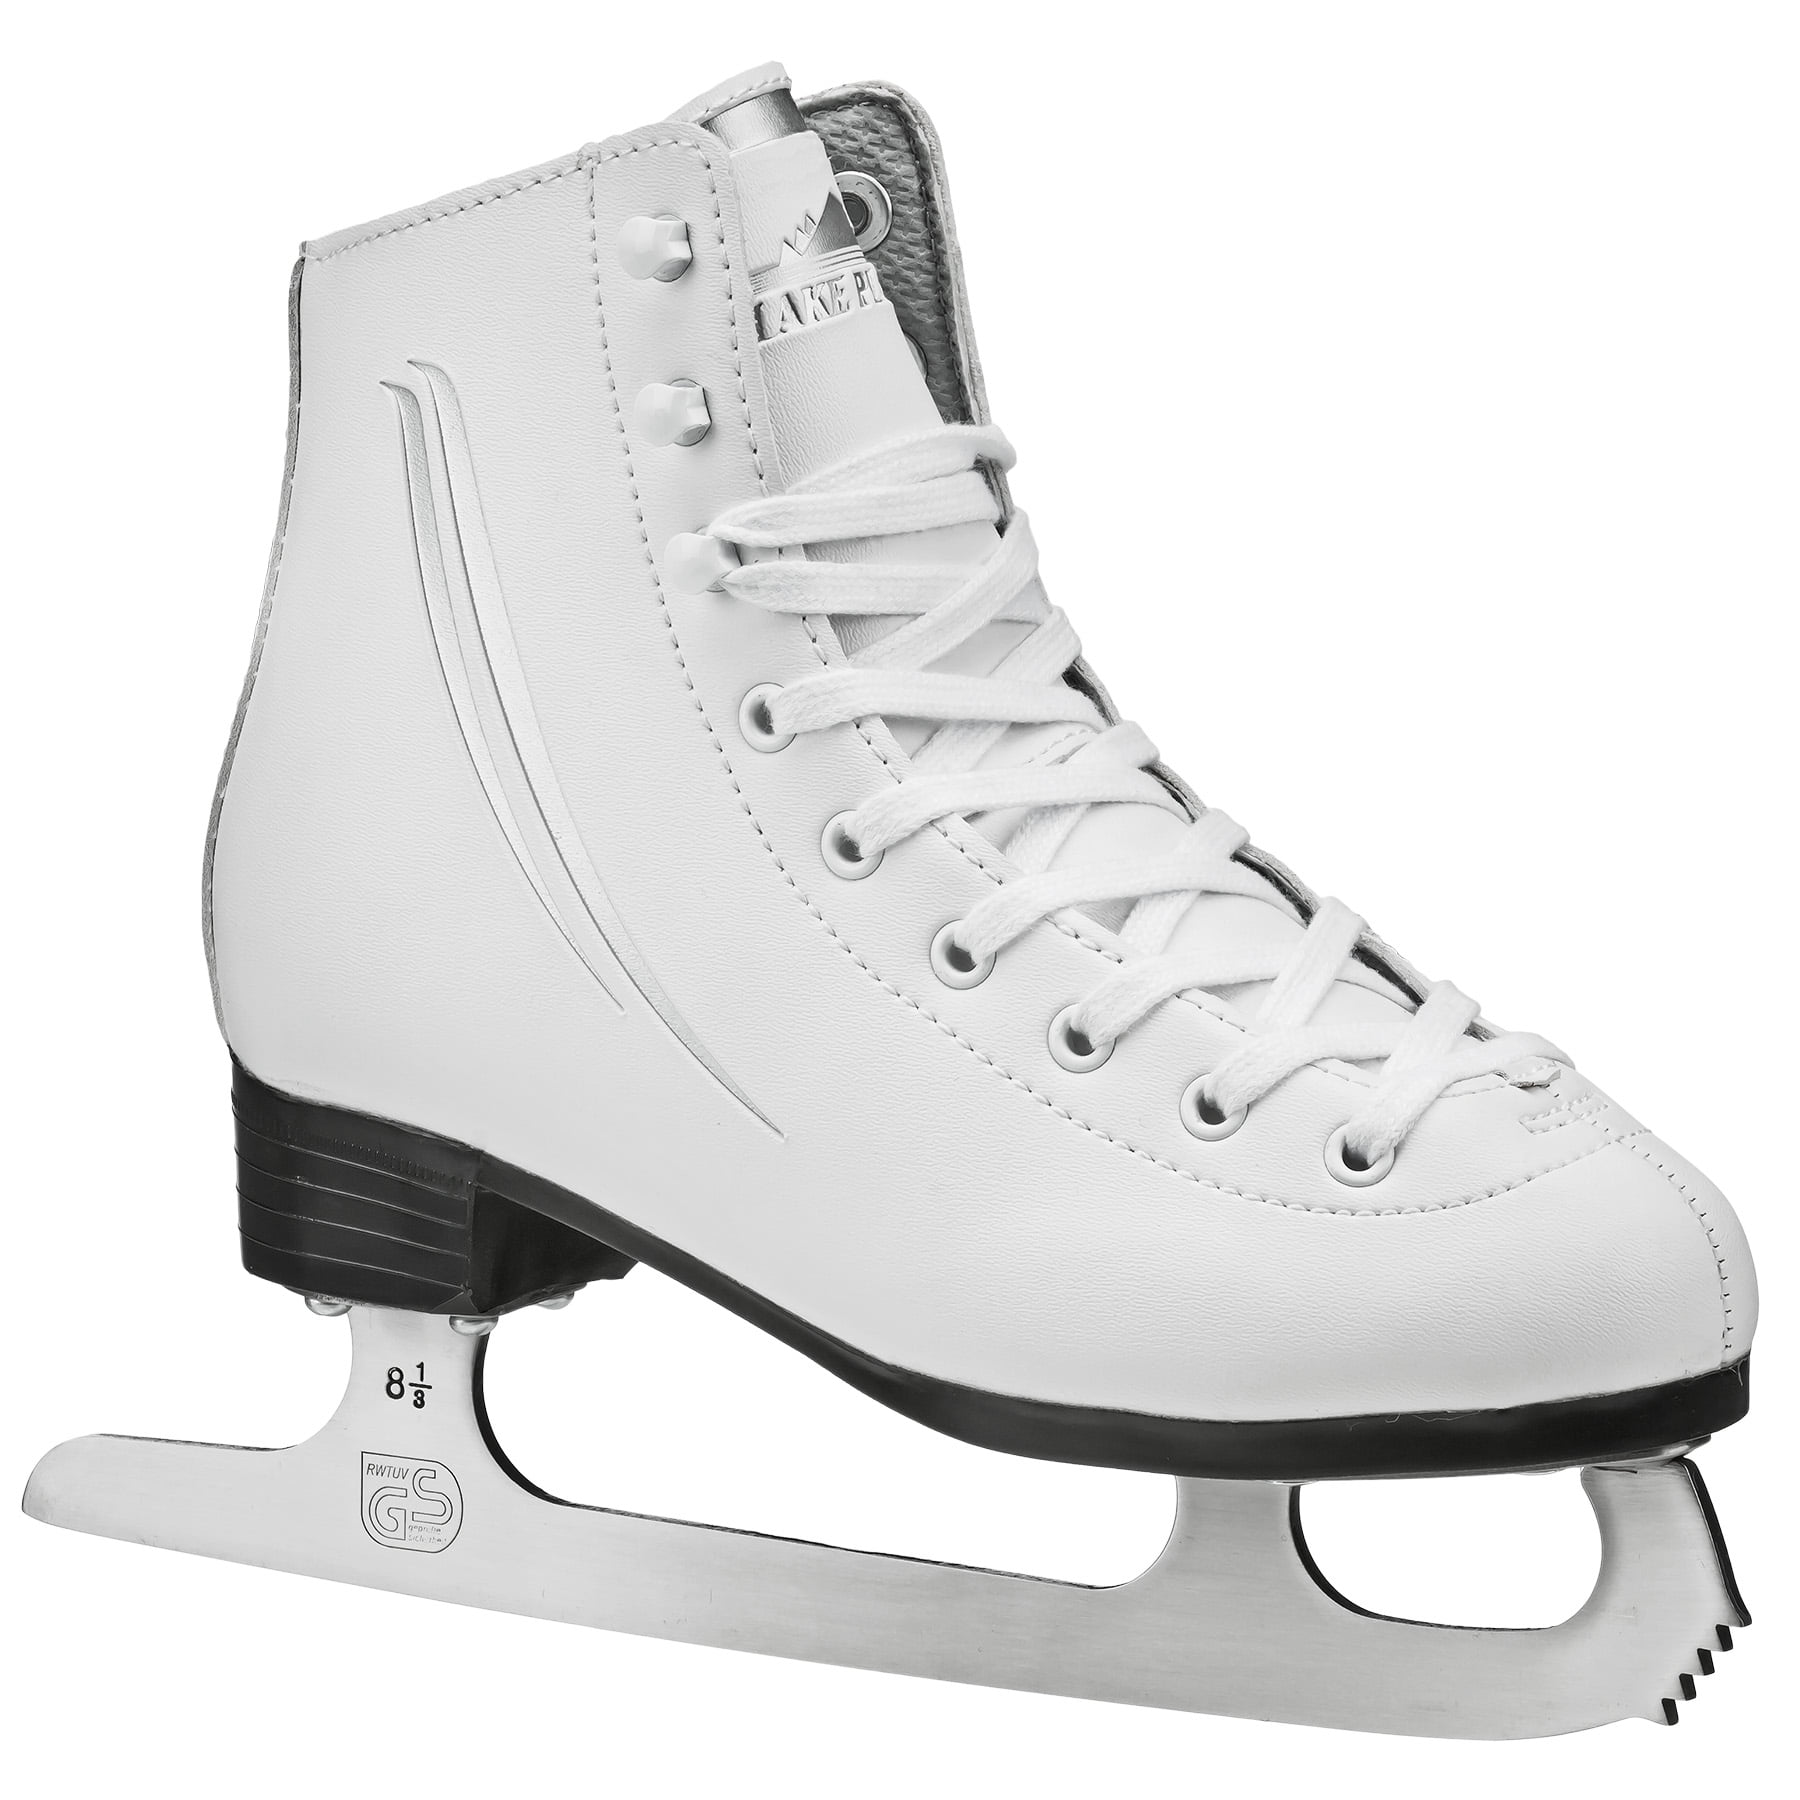 New White & Aqua Lake Placid Adjustable Ice Skates Kid age 4-6 size 11-1 